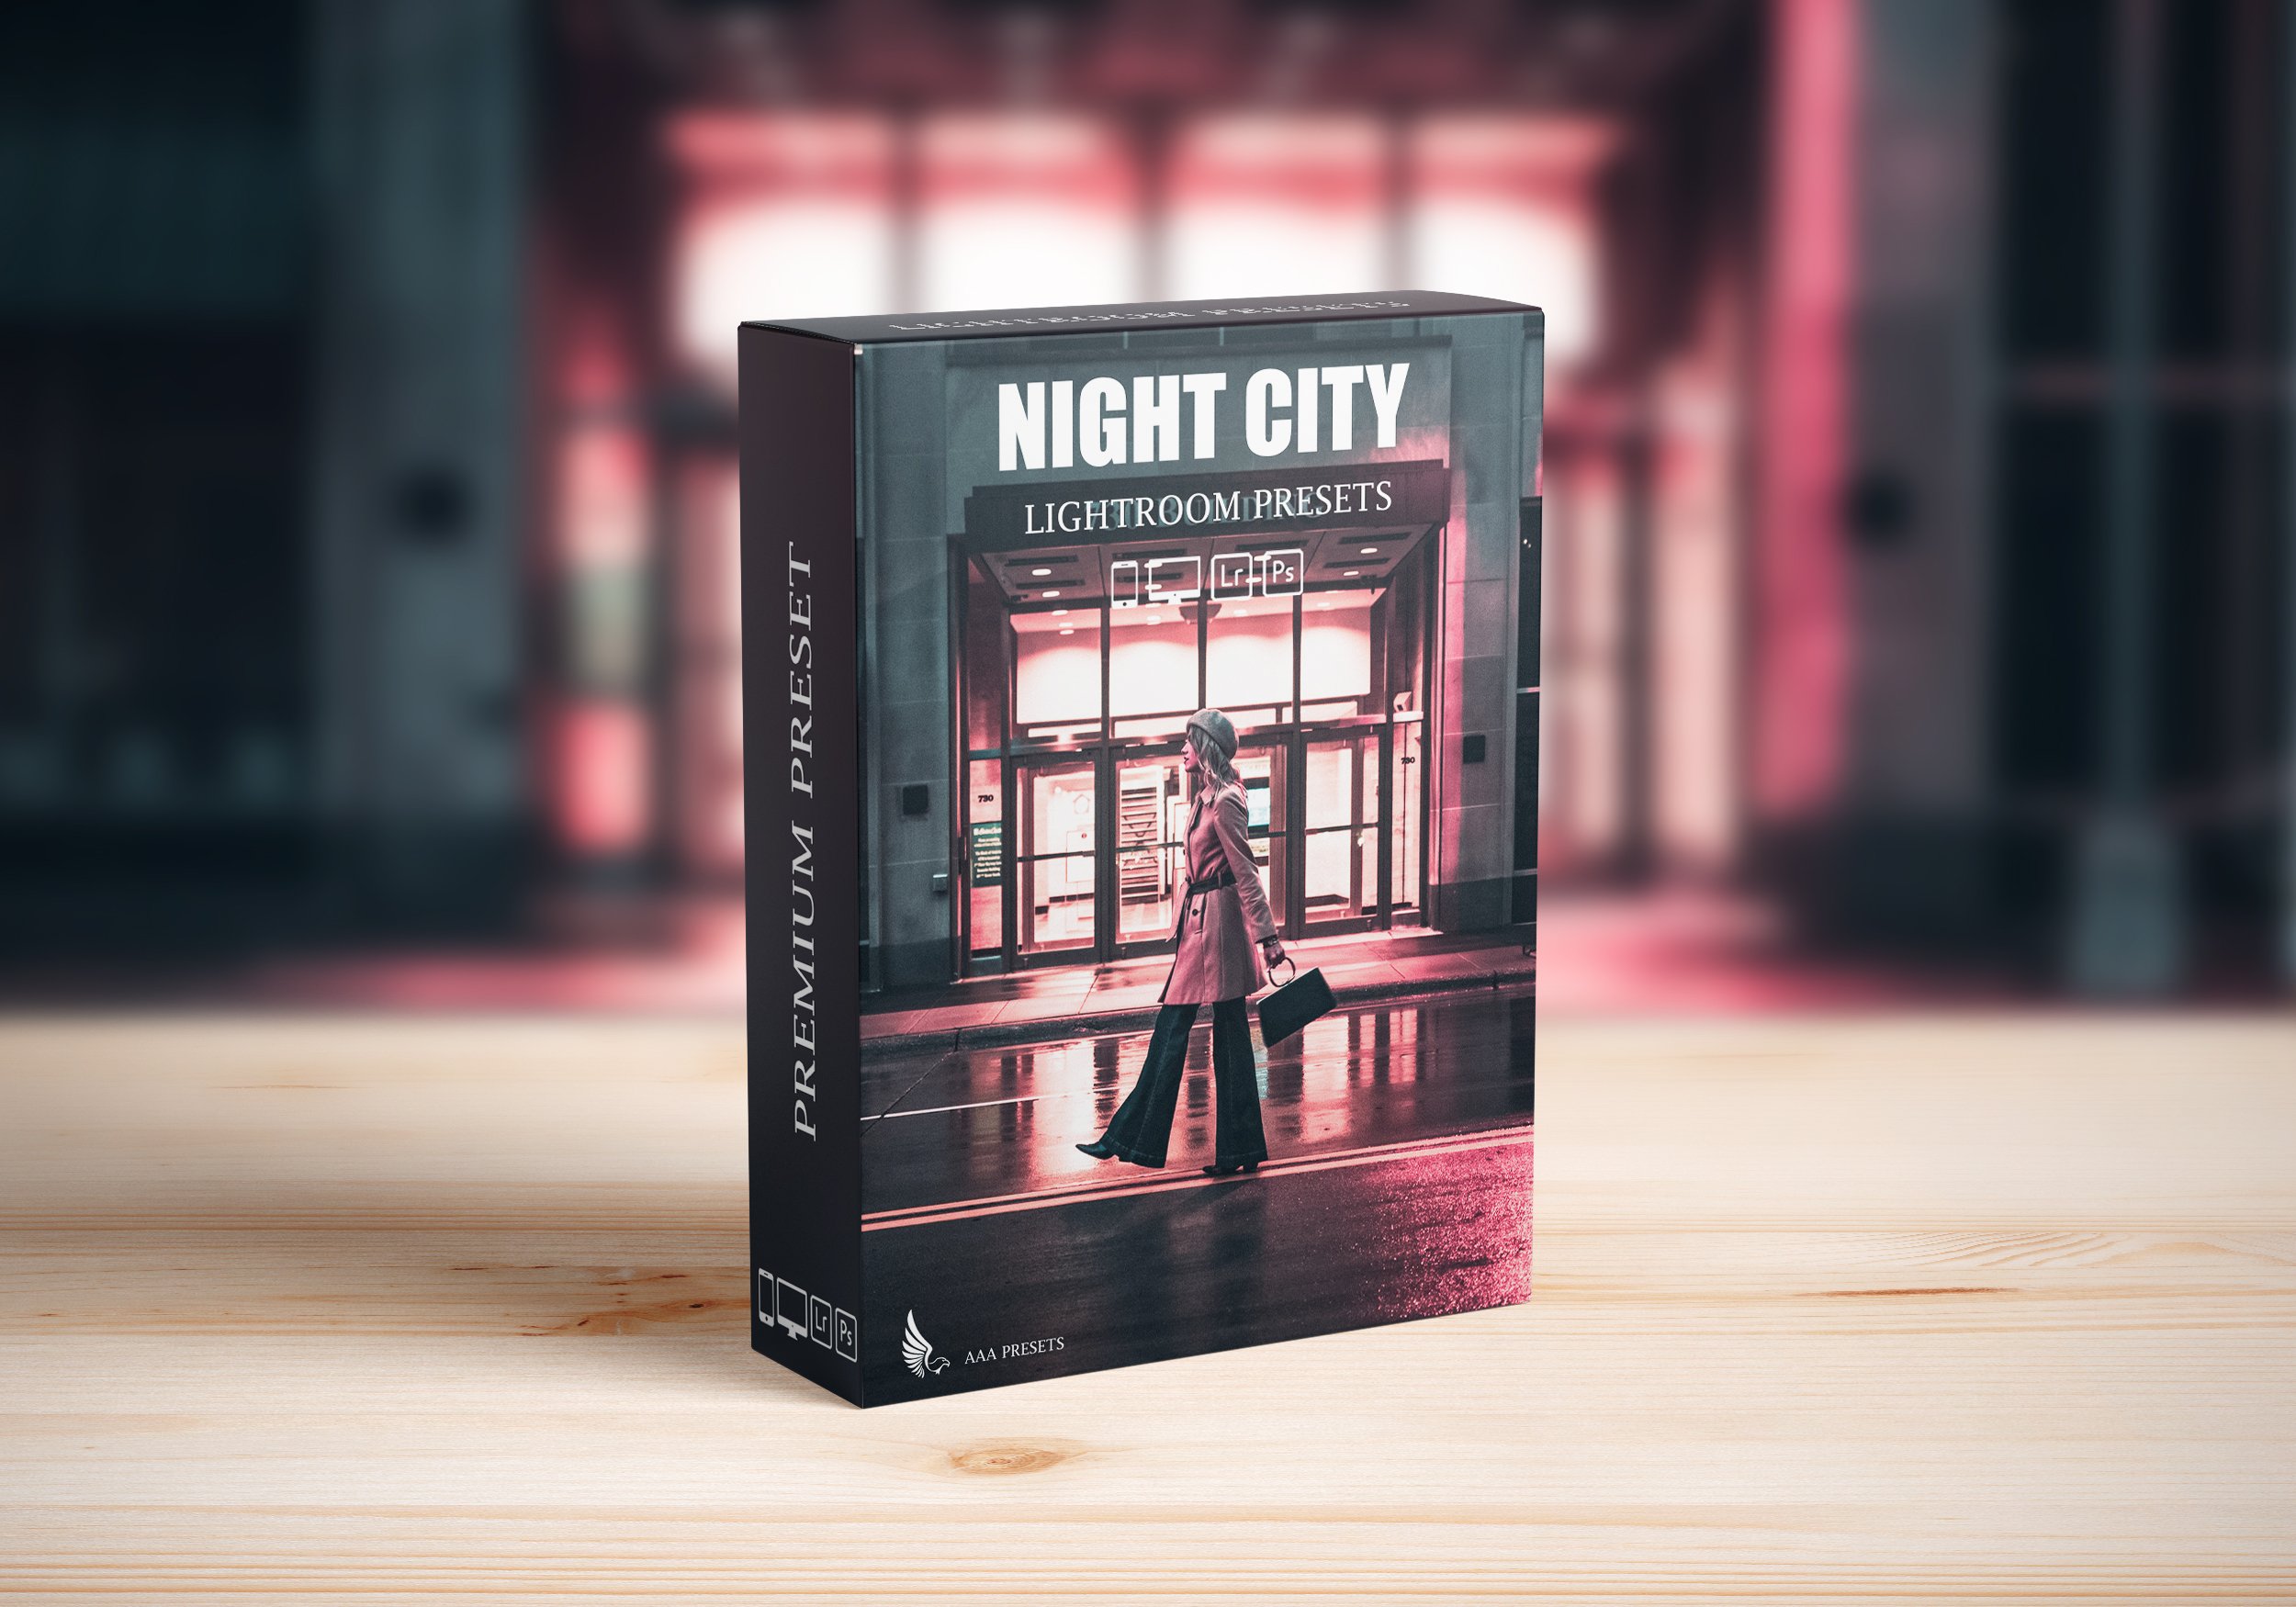 Night City Neon Light Presetscover image.